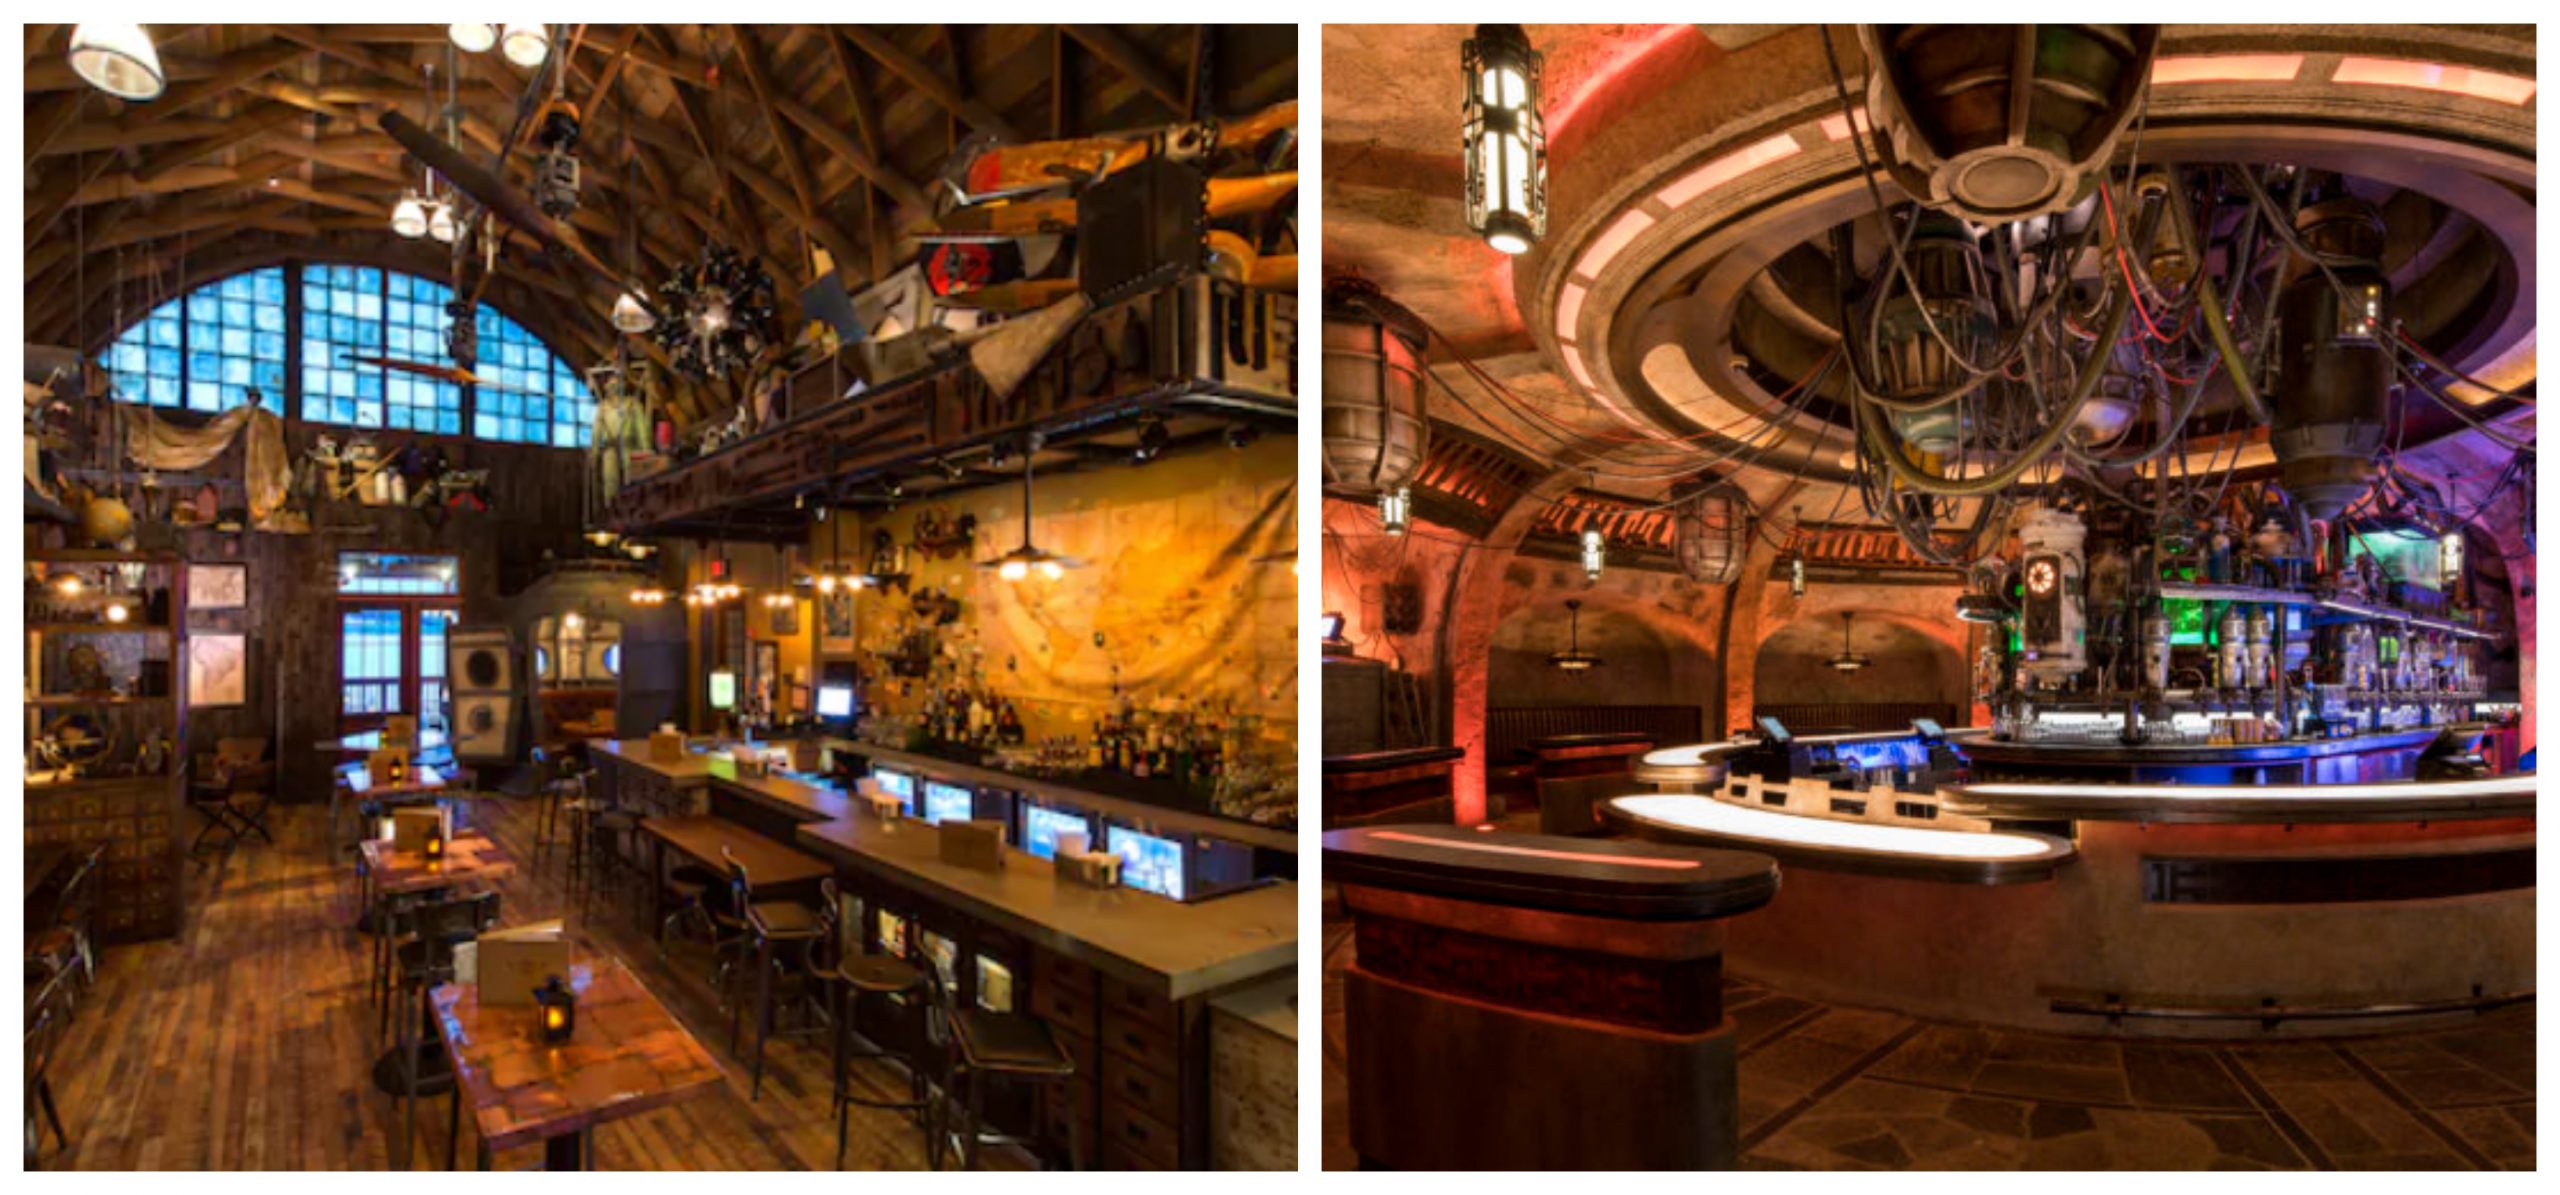 Update on bars reopening at Walt Disney World